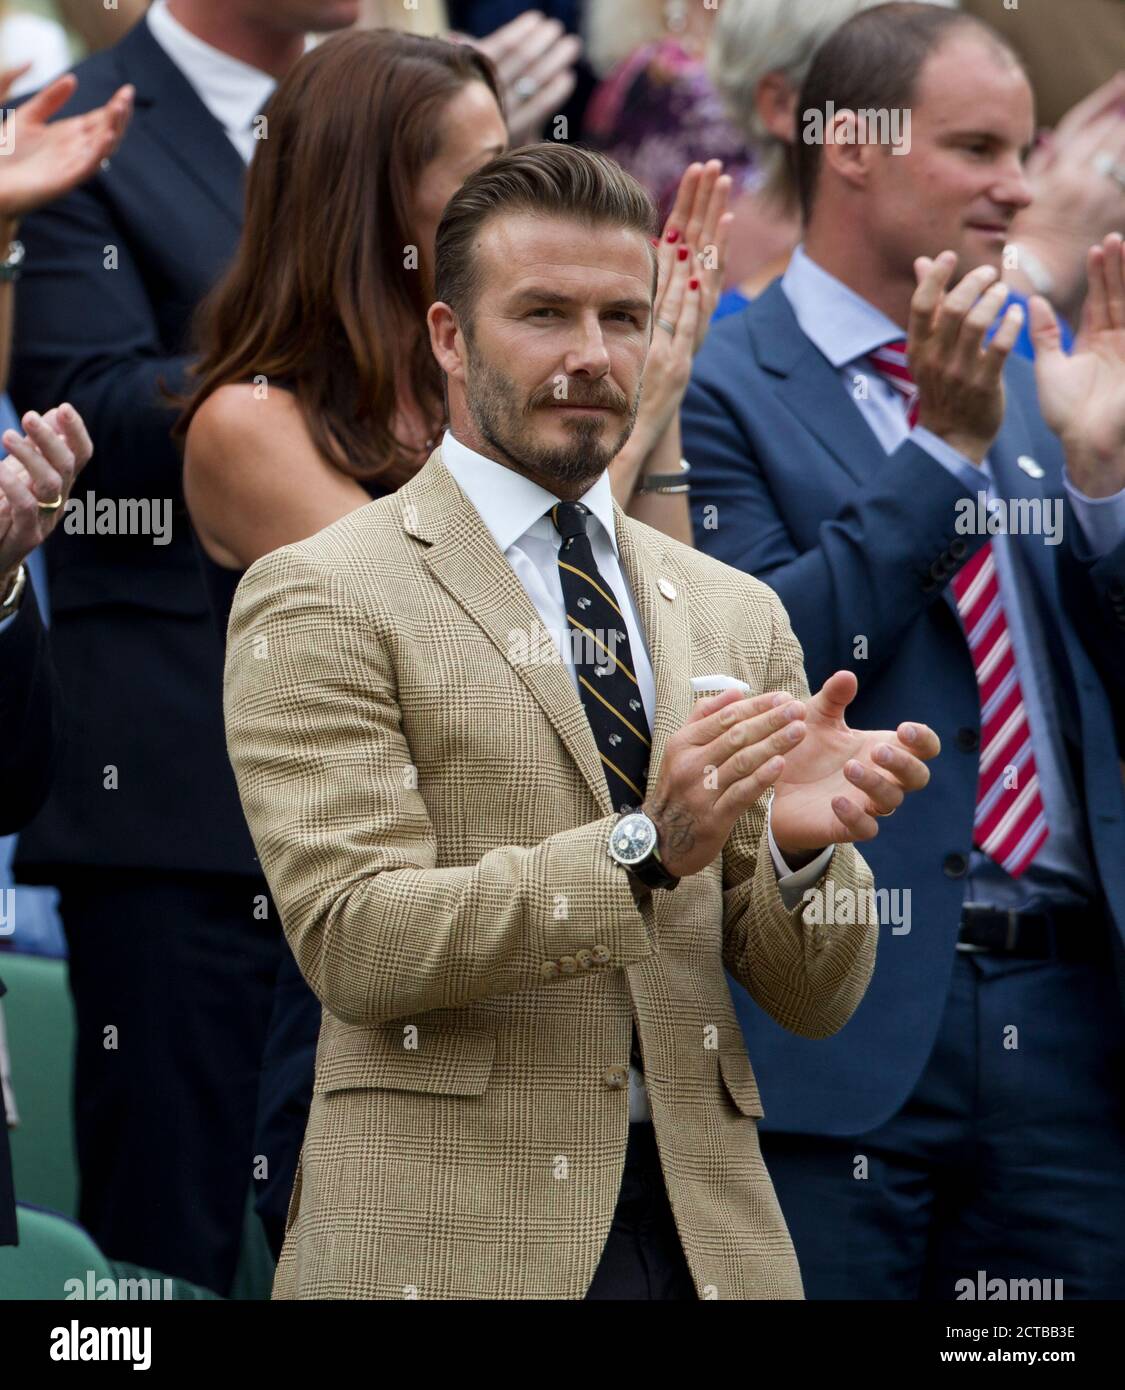 David Beckham. Roger Federer v Santiago Giraldo. WIMBLEDON TENNIS CHAMPIONSHIPS 2014. Picture : © Mark Pain / Alamy Stock Photo